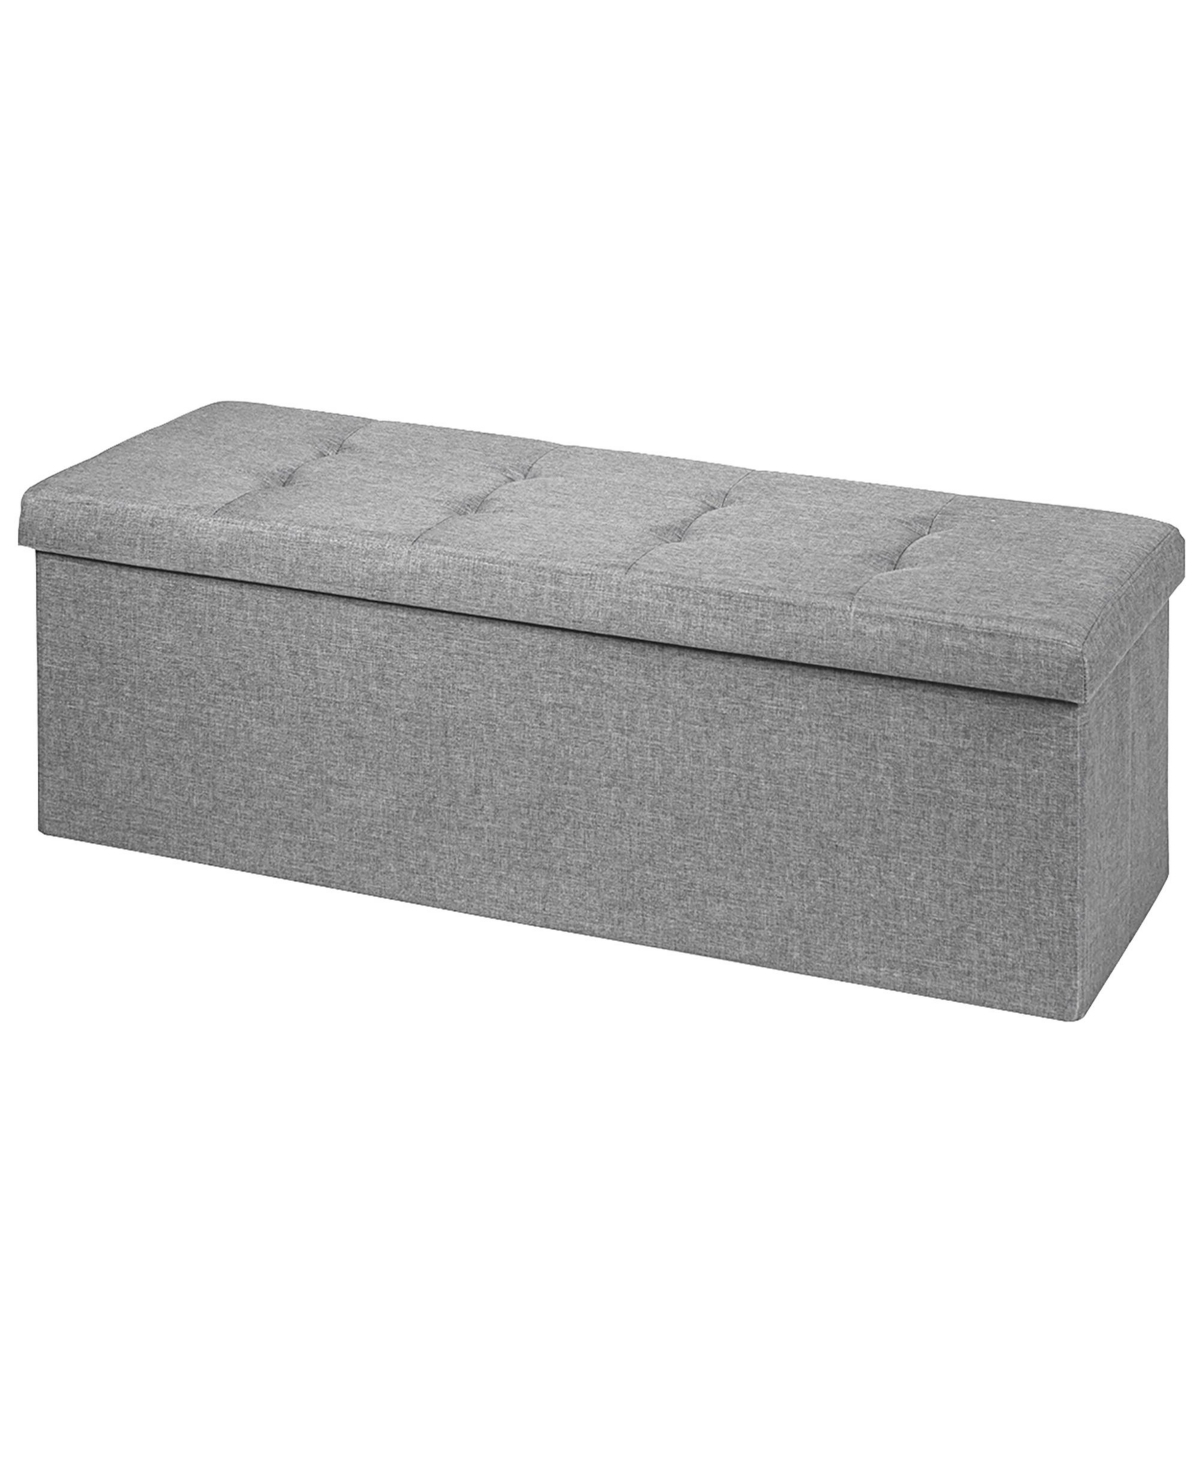 Fabric Folding Storage Ottoman Storage Chest W/Divider Bed End Bench - Grey